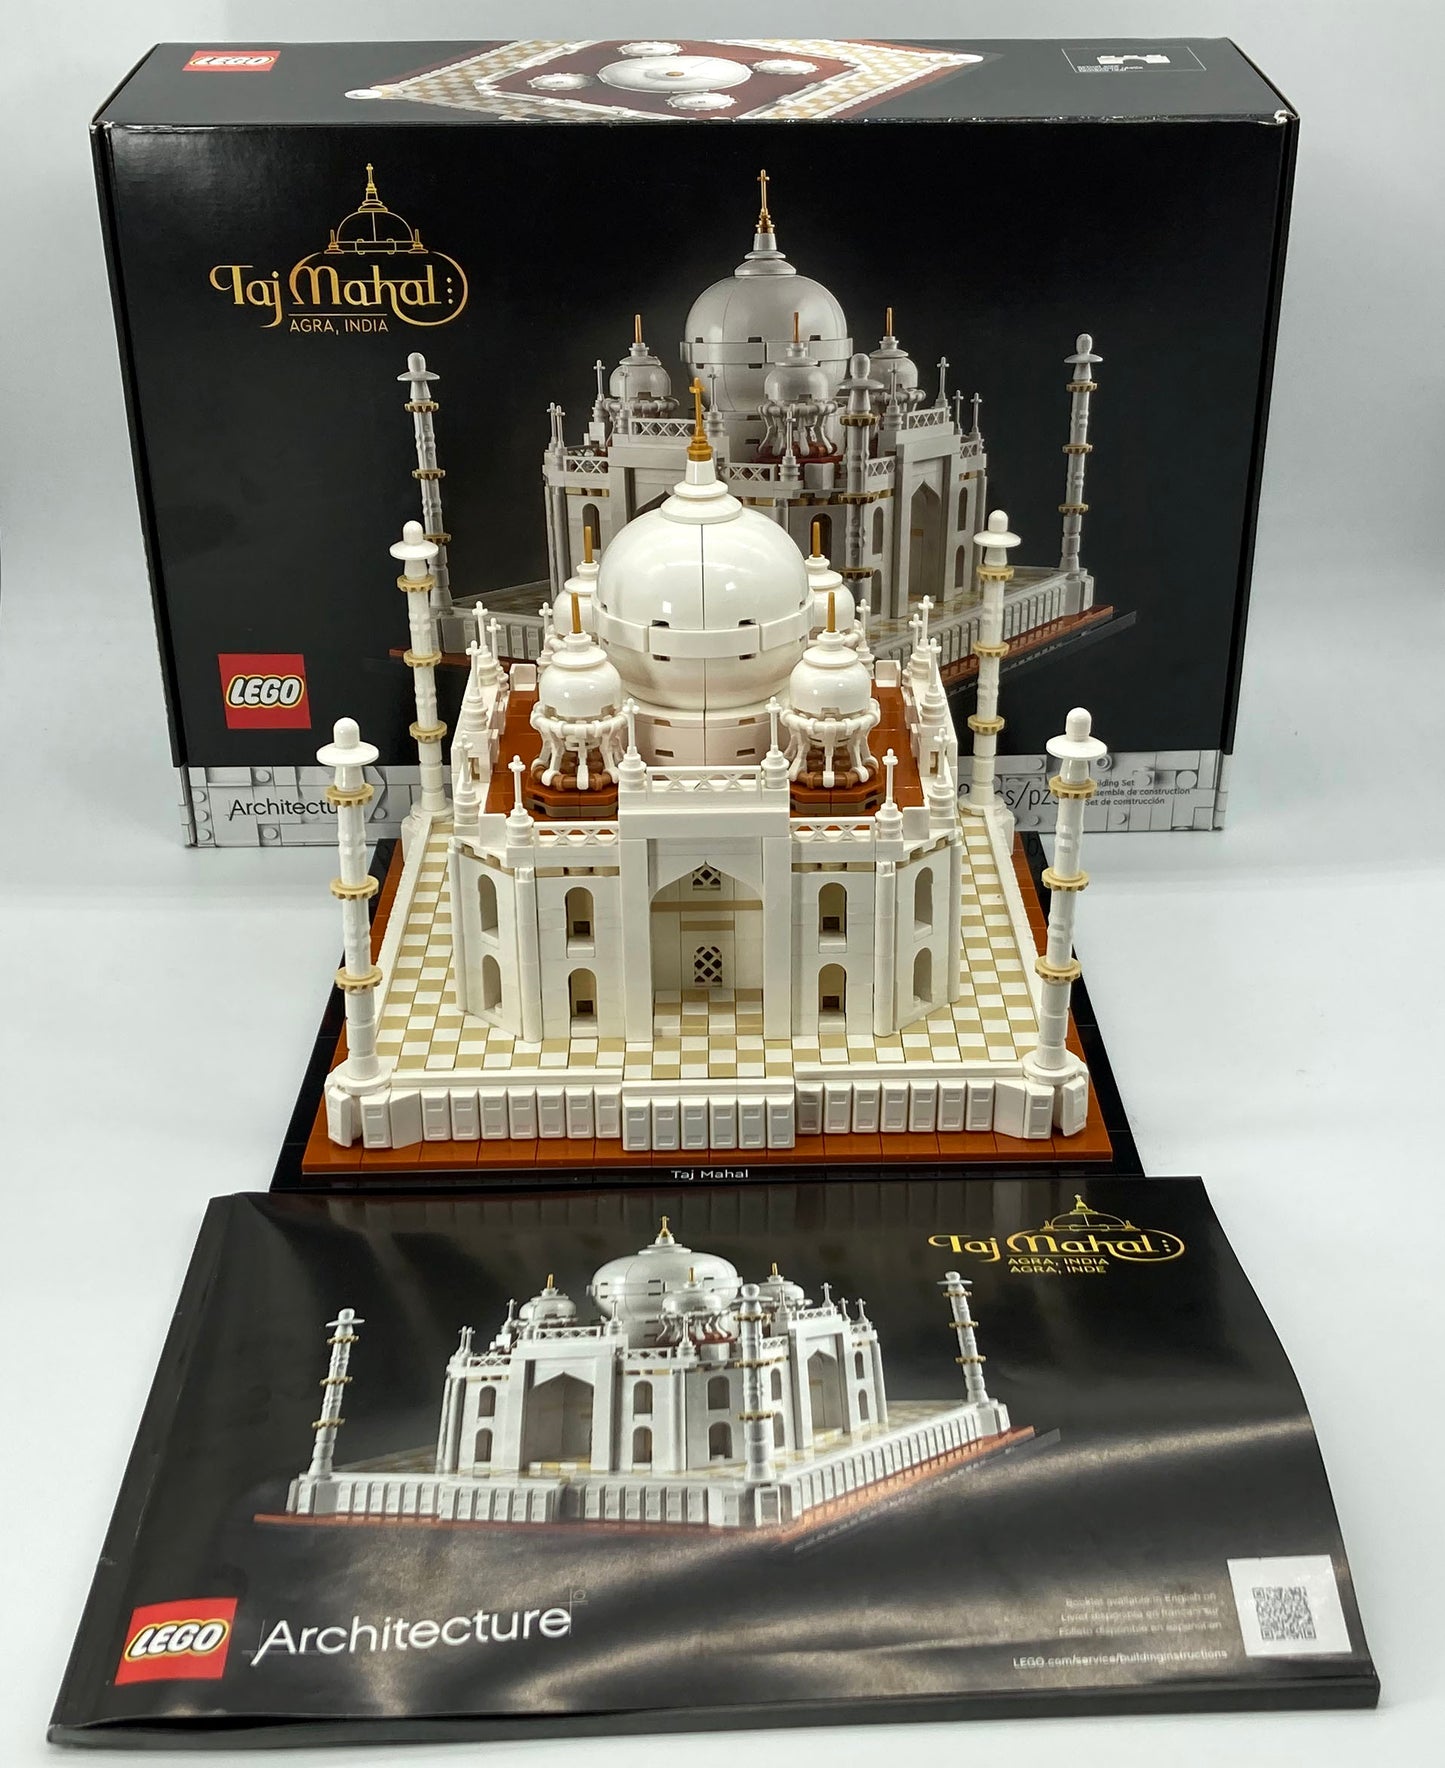 Used Set 21056 Taj Mahal (with Instruction Manual and Box)